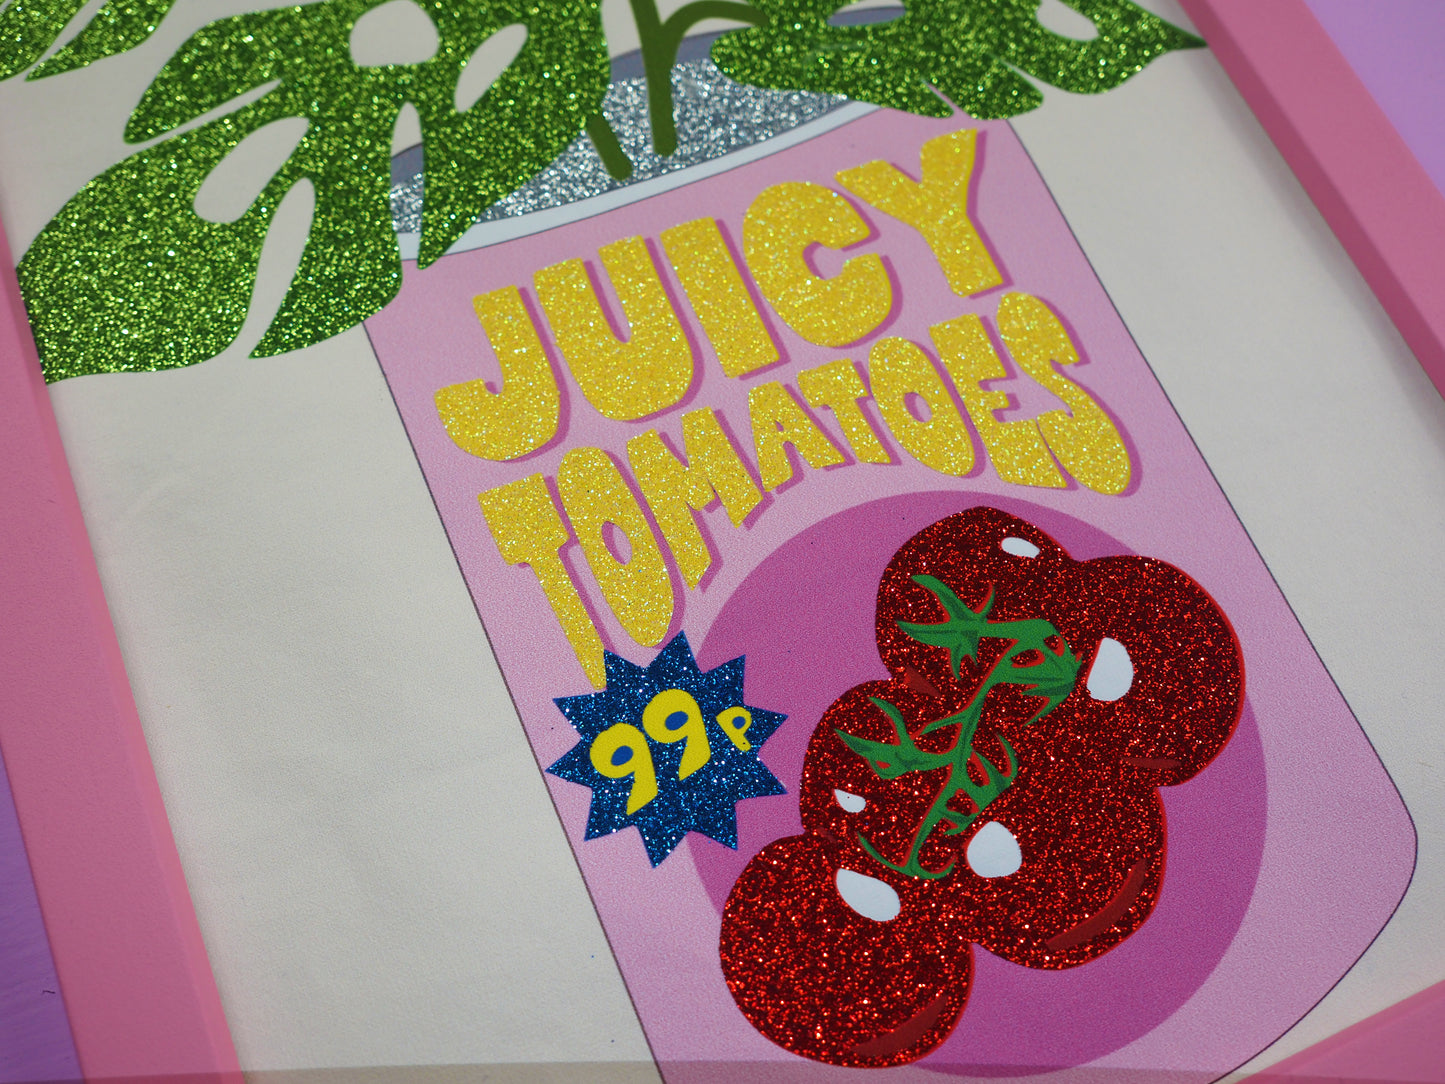 Juicy Tomatoes Glitter Fabric Print